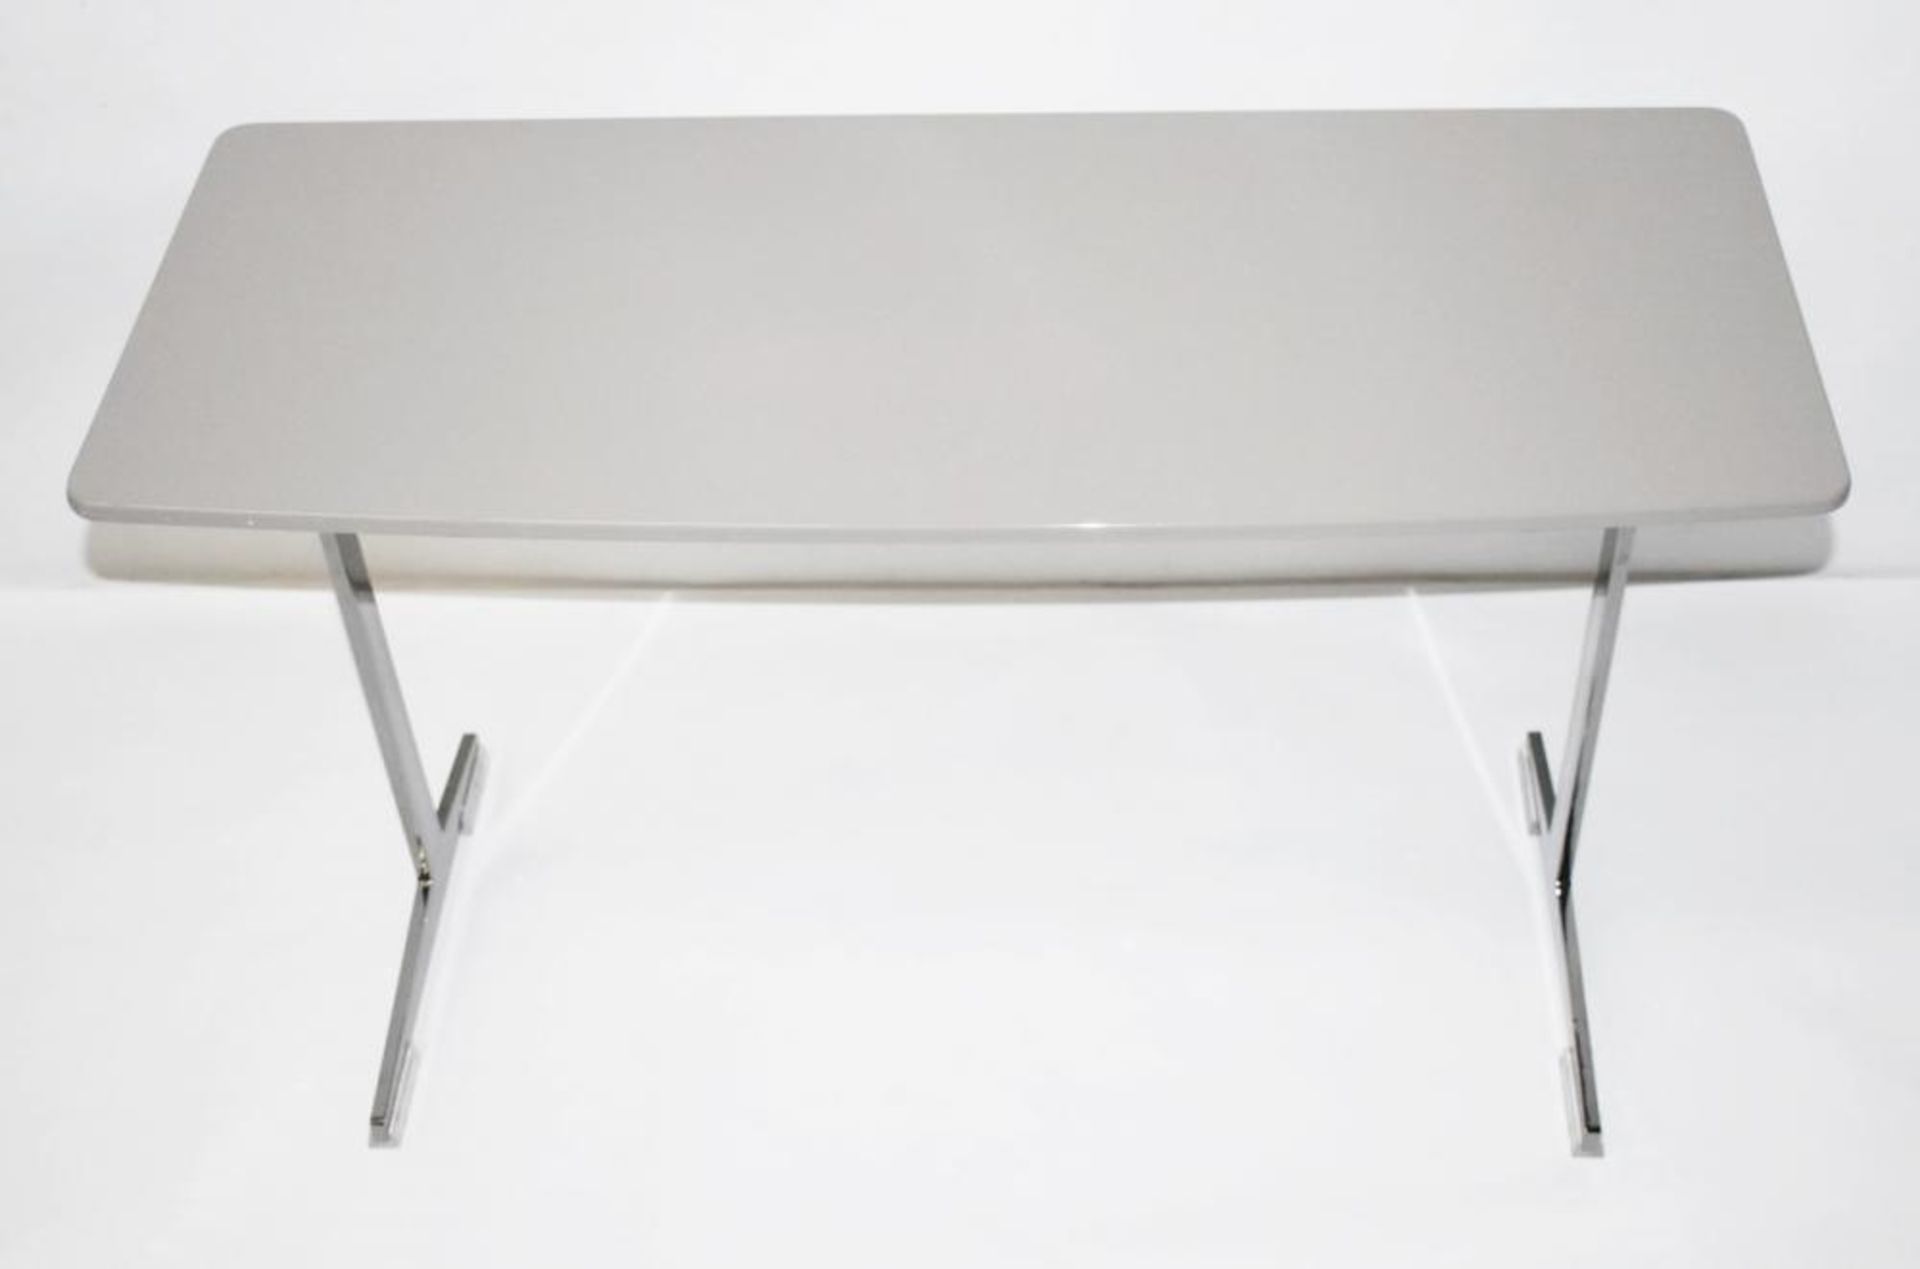 1 x FLEXFORM 'Cestone' Italian Made Designer Slot-In Sidetable In Dove Grey & Chrome - RRP £1,573 - Image 7 of 8